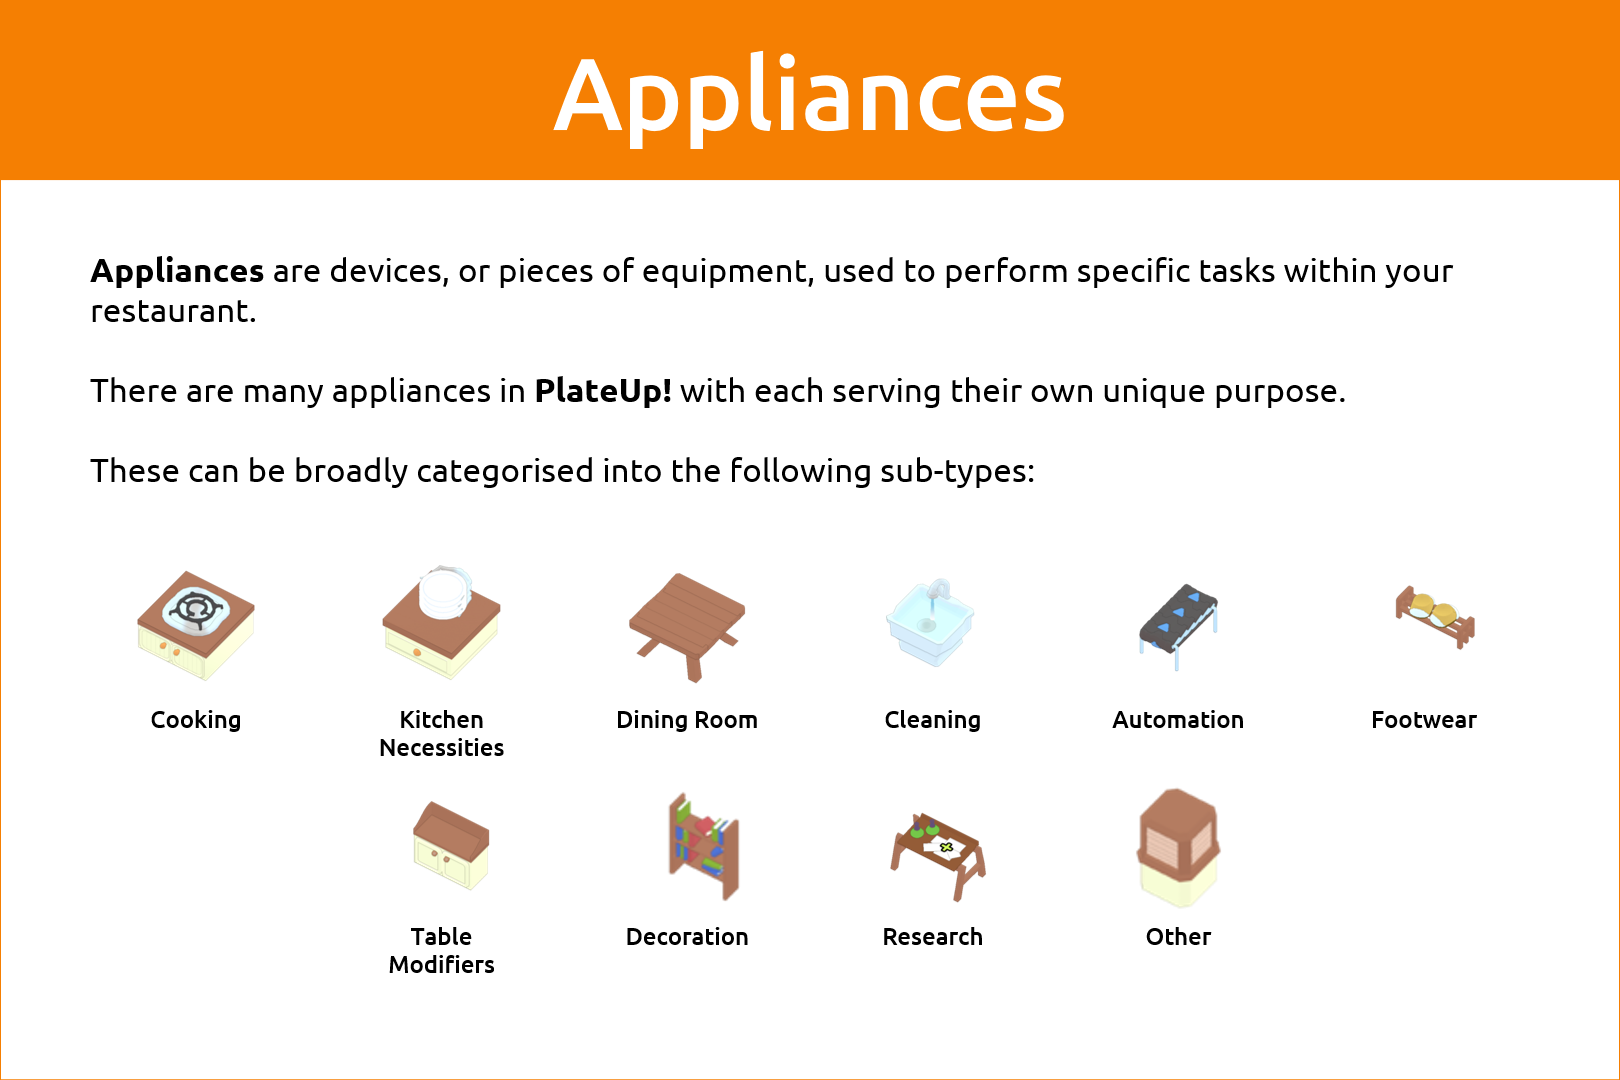 PlateUp! Complete Appliances Guide - Overview - 9865D3F